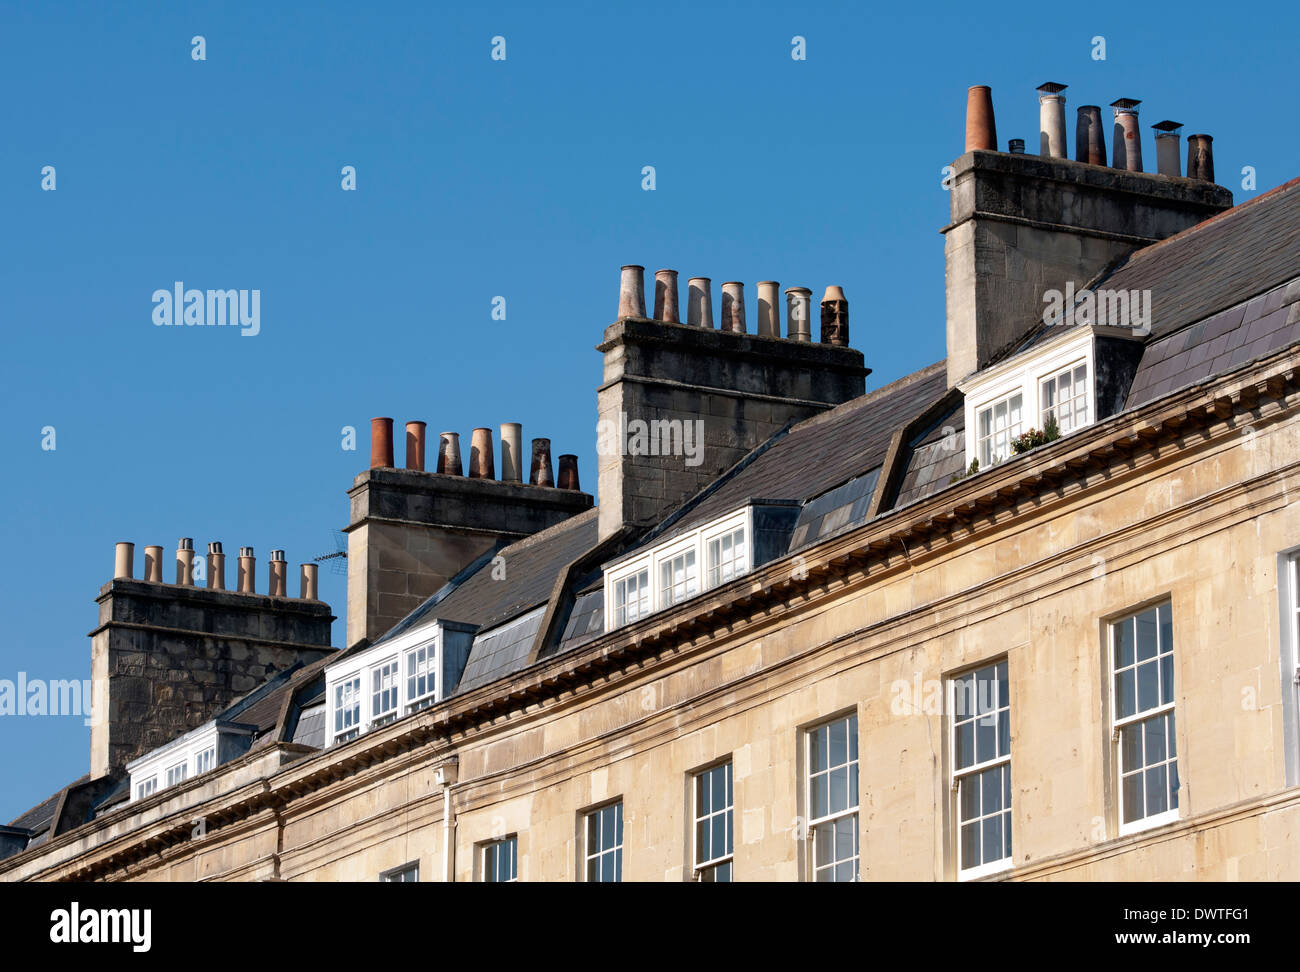 Great Pulteney Street, Bath, Somerset, Inghilterra, Regno Unito Foto Stock